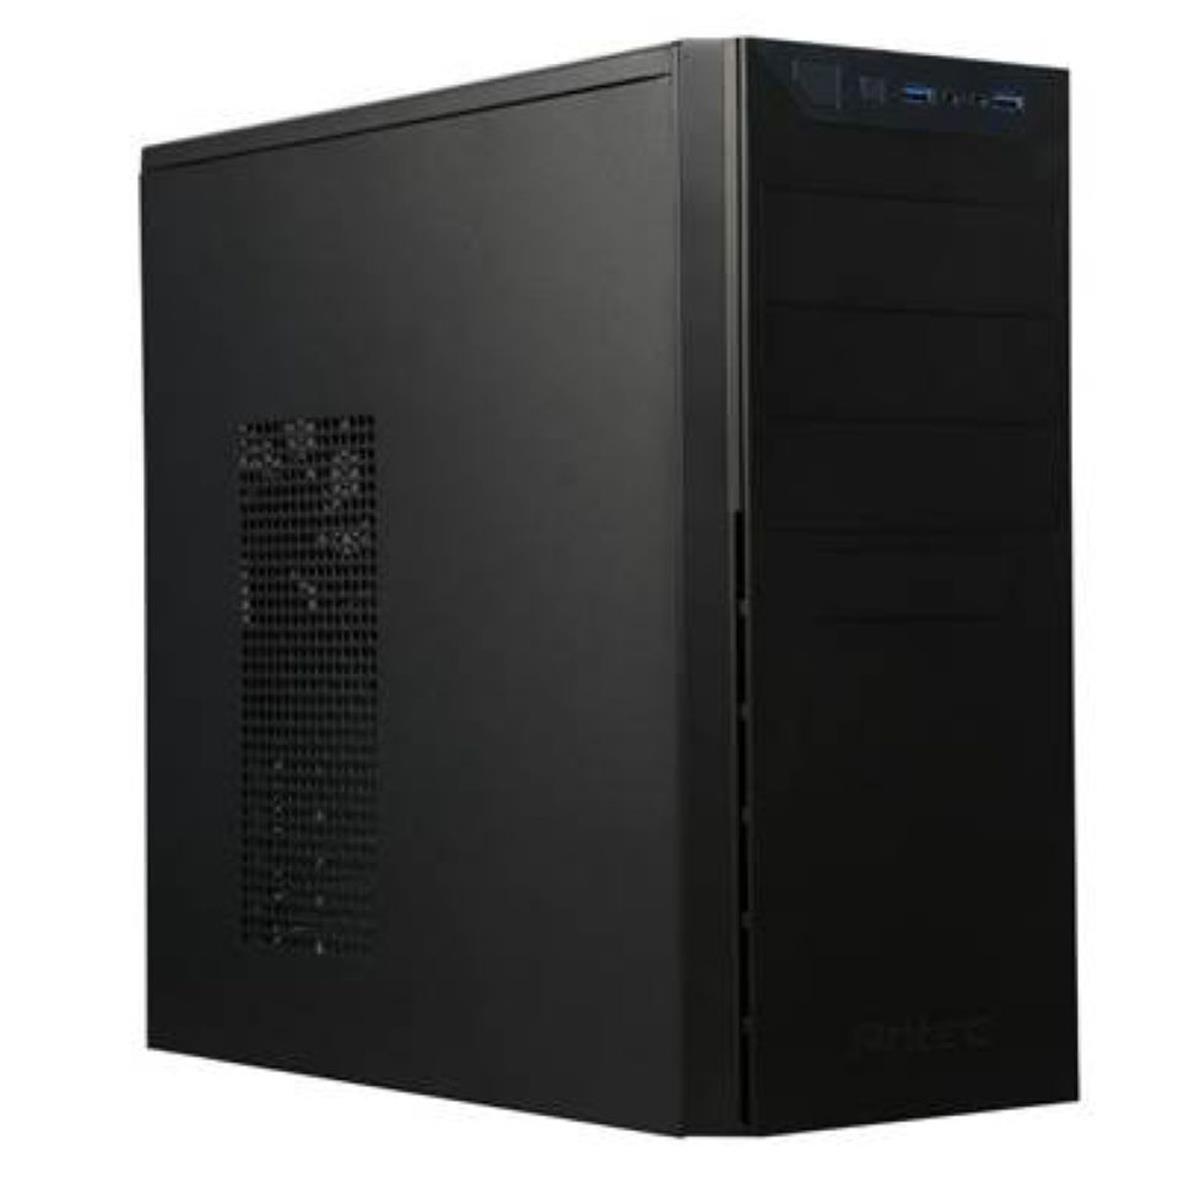 

Antec VSK4000E-U3 ATX Mid-Tower Computer Case, Black